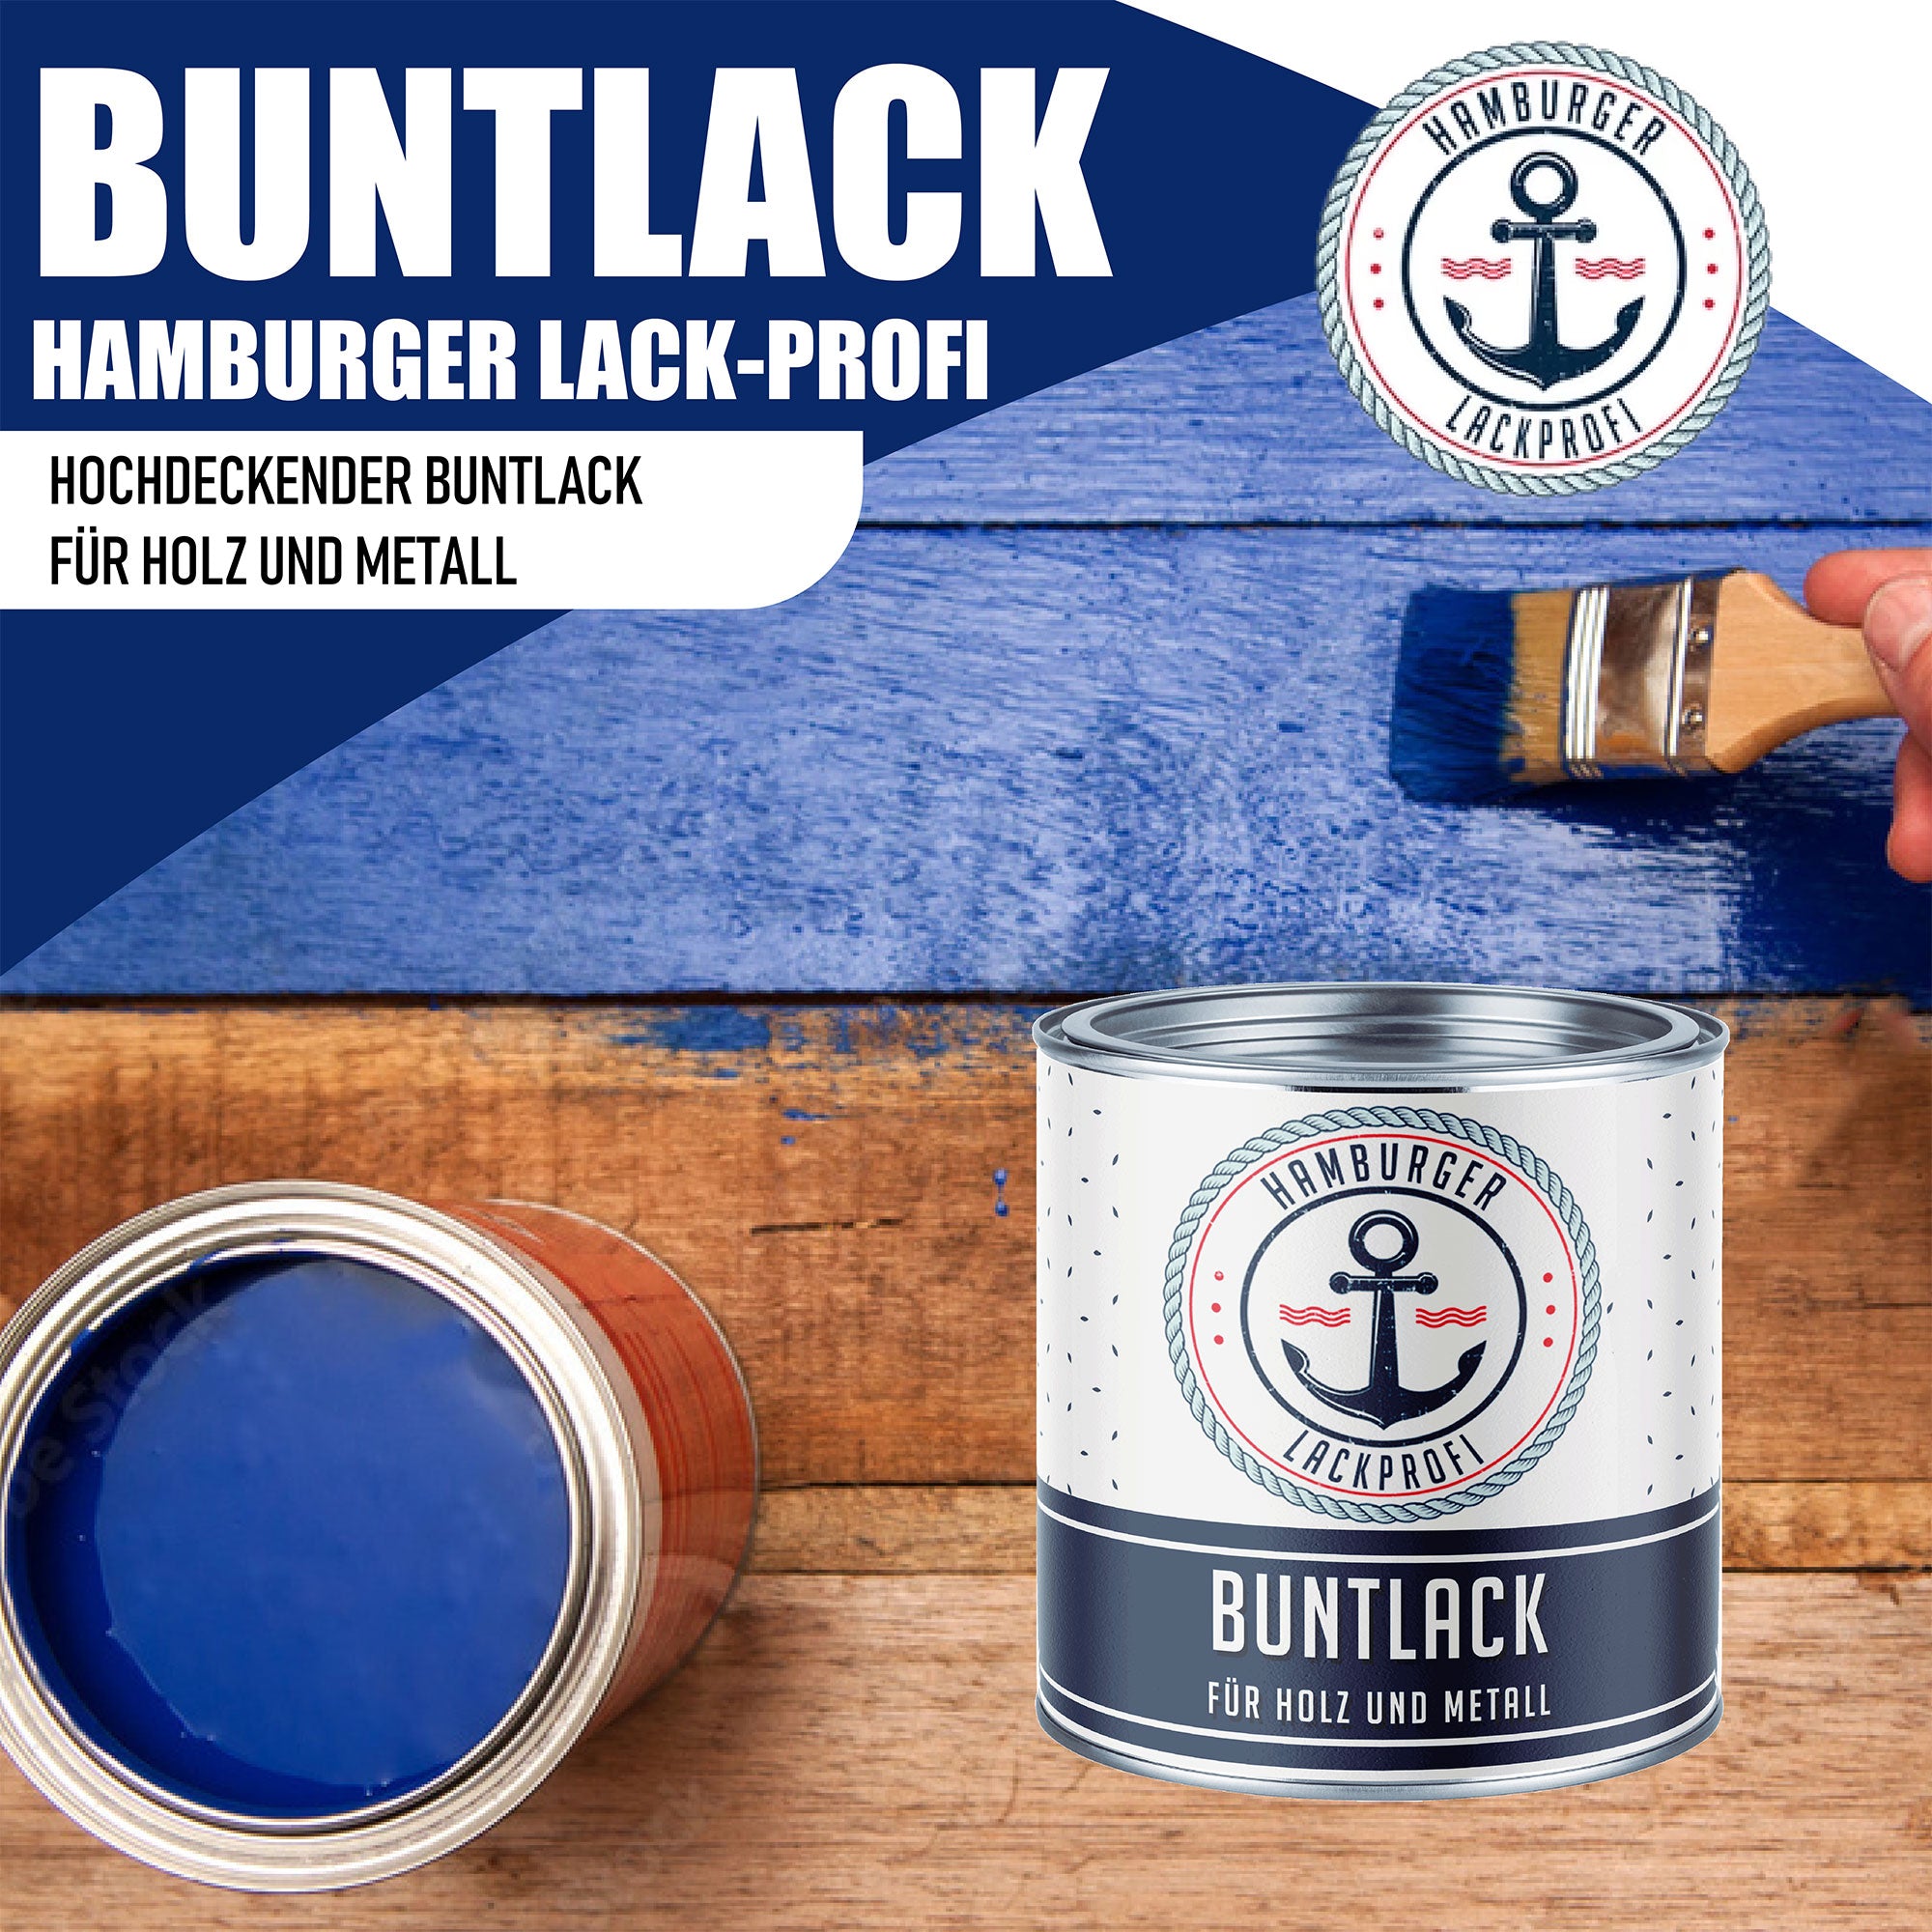 Hamburger Lack-Profi Buntlack in Nußbraun RAL 8011 mit Lackierset (X300) & Verdünnung (1 L) - 30% Sparangebot